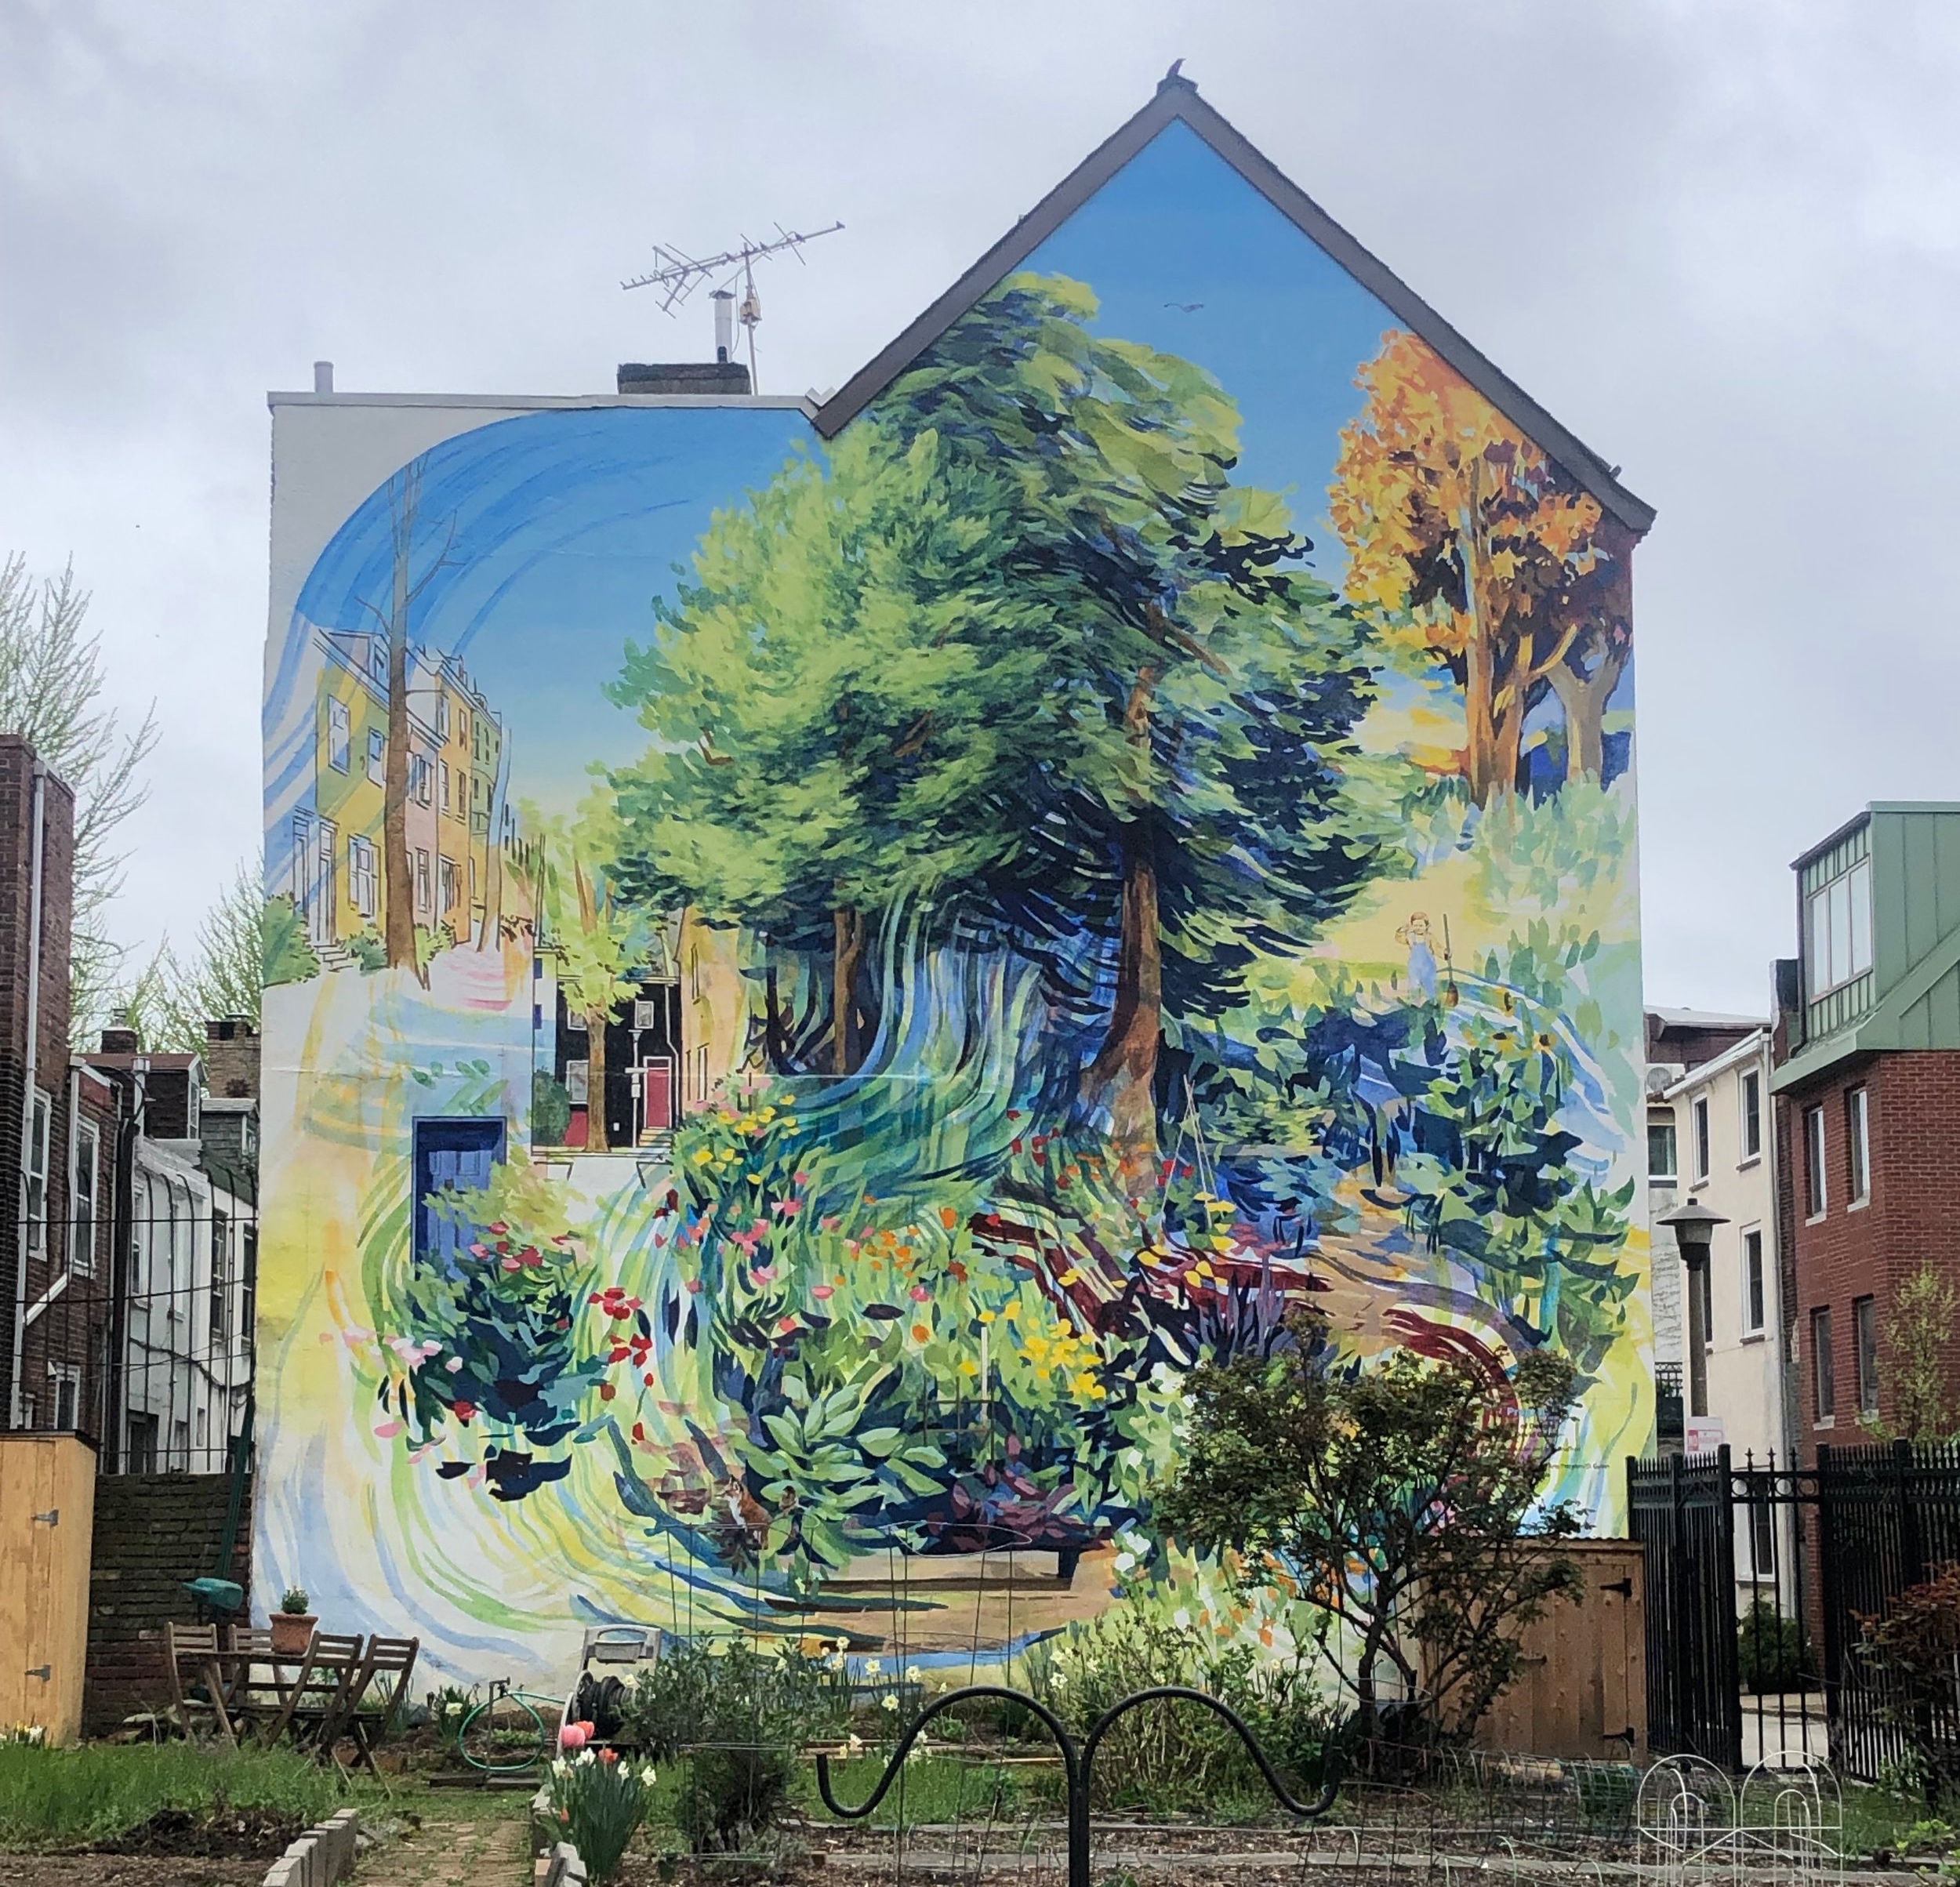 Where Can I Find The Best Street Art In Philadelphia?